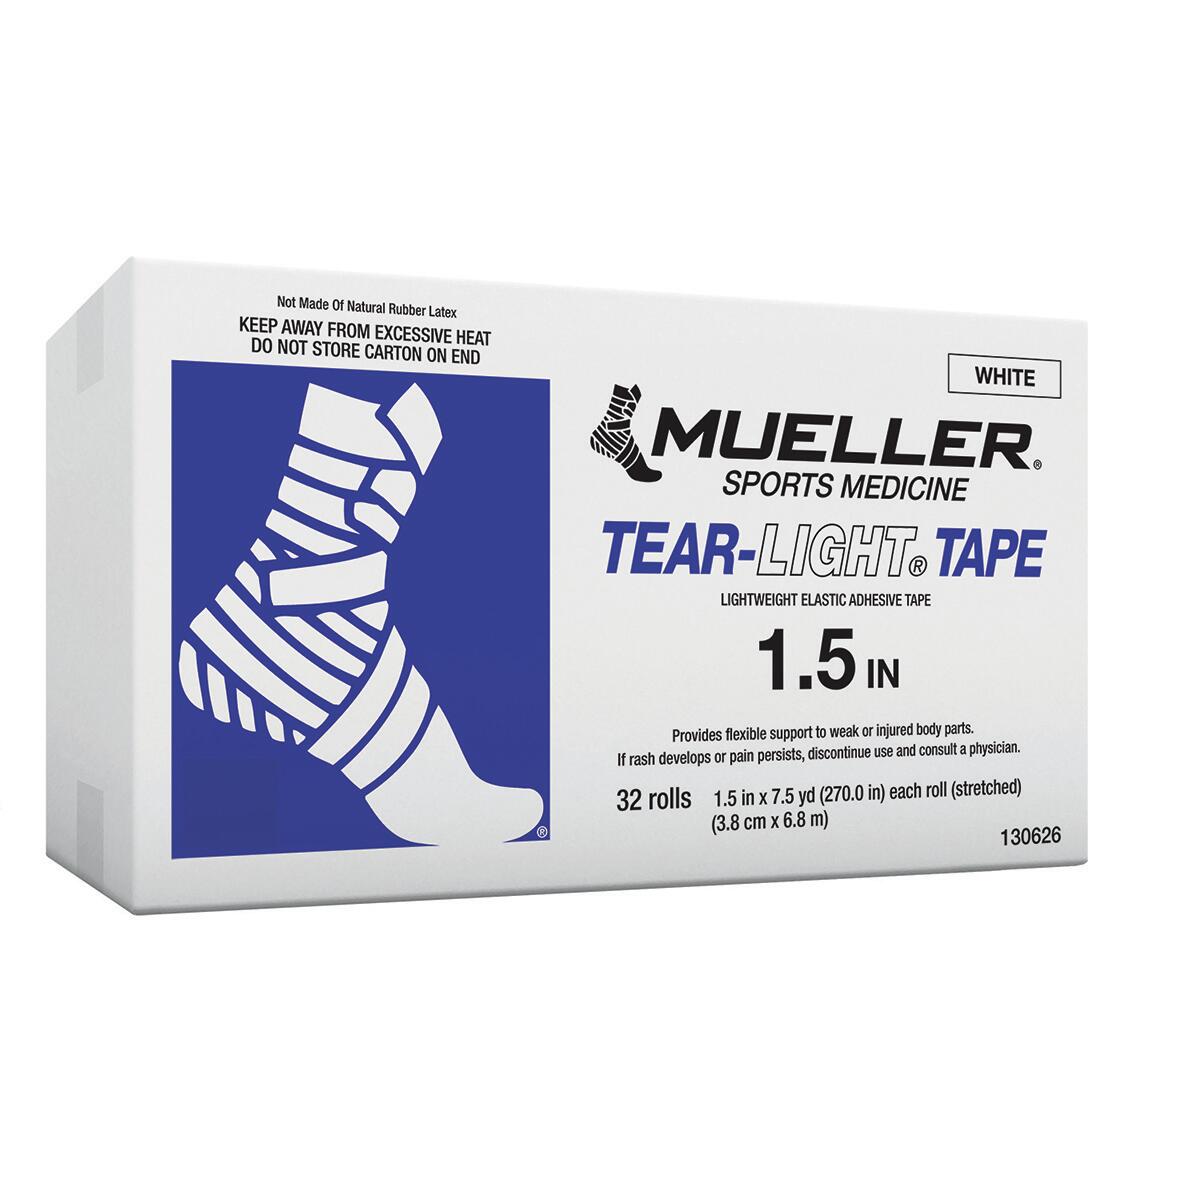 Mueller Muscle Support Tear-Light Tape White 3.8cm x 6.9m - x32 1/2